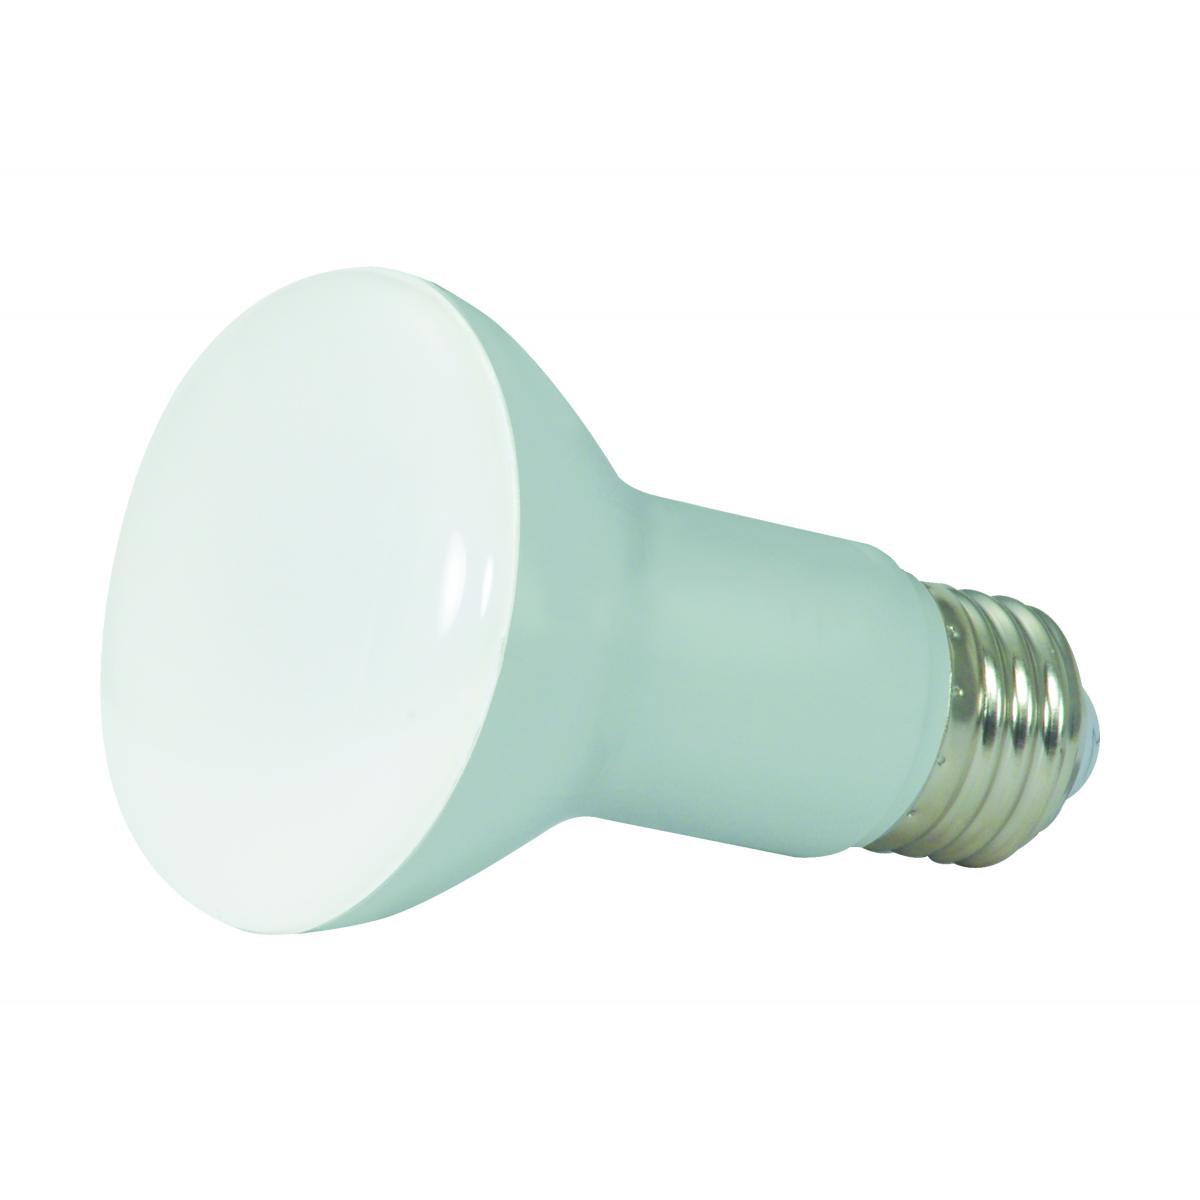 LED R20/BR20 Reflector bulb, 7 watt, 525 Lumens, 3000K, E26 Medium Base, 107 Deg. Flood, Dimmable